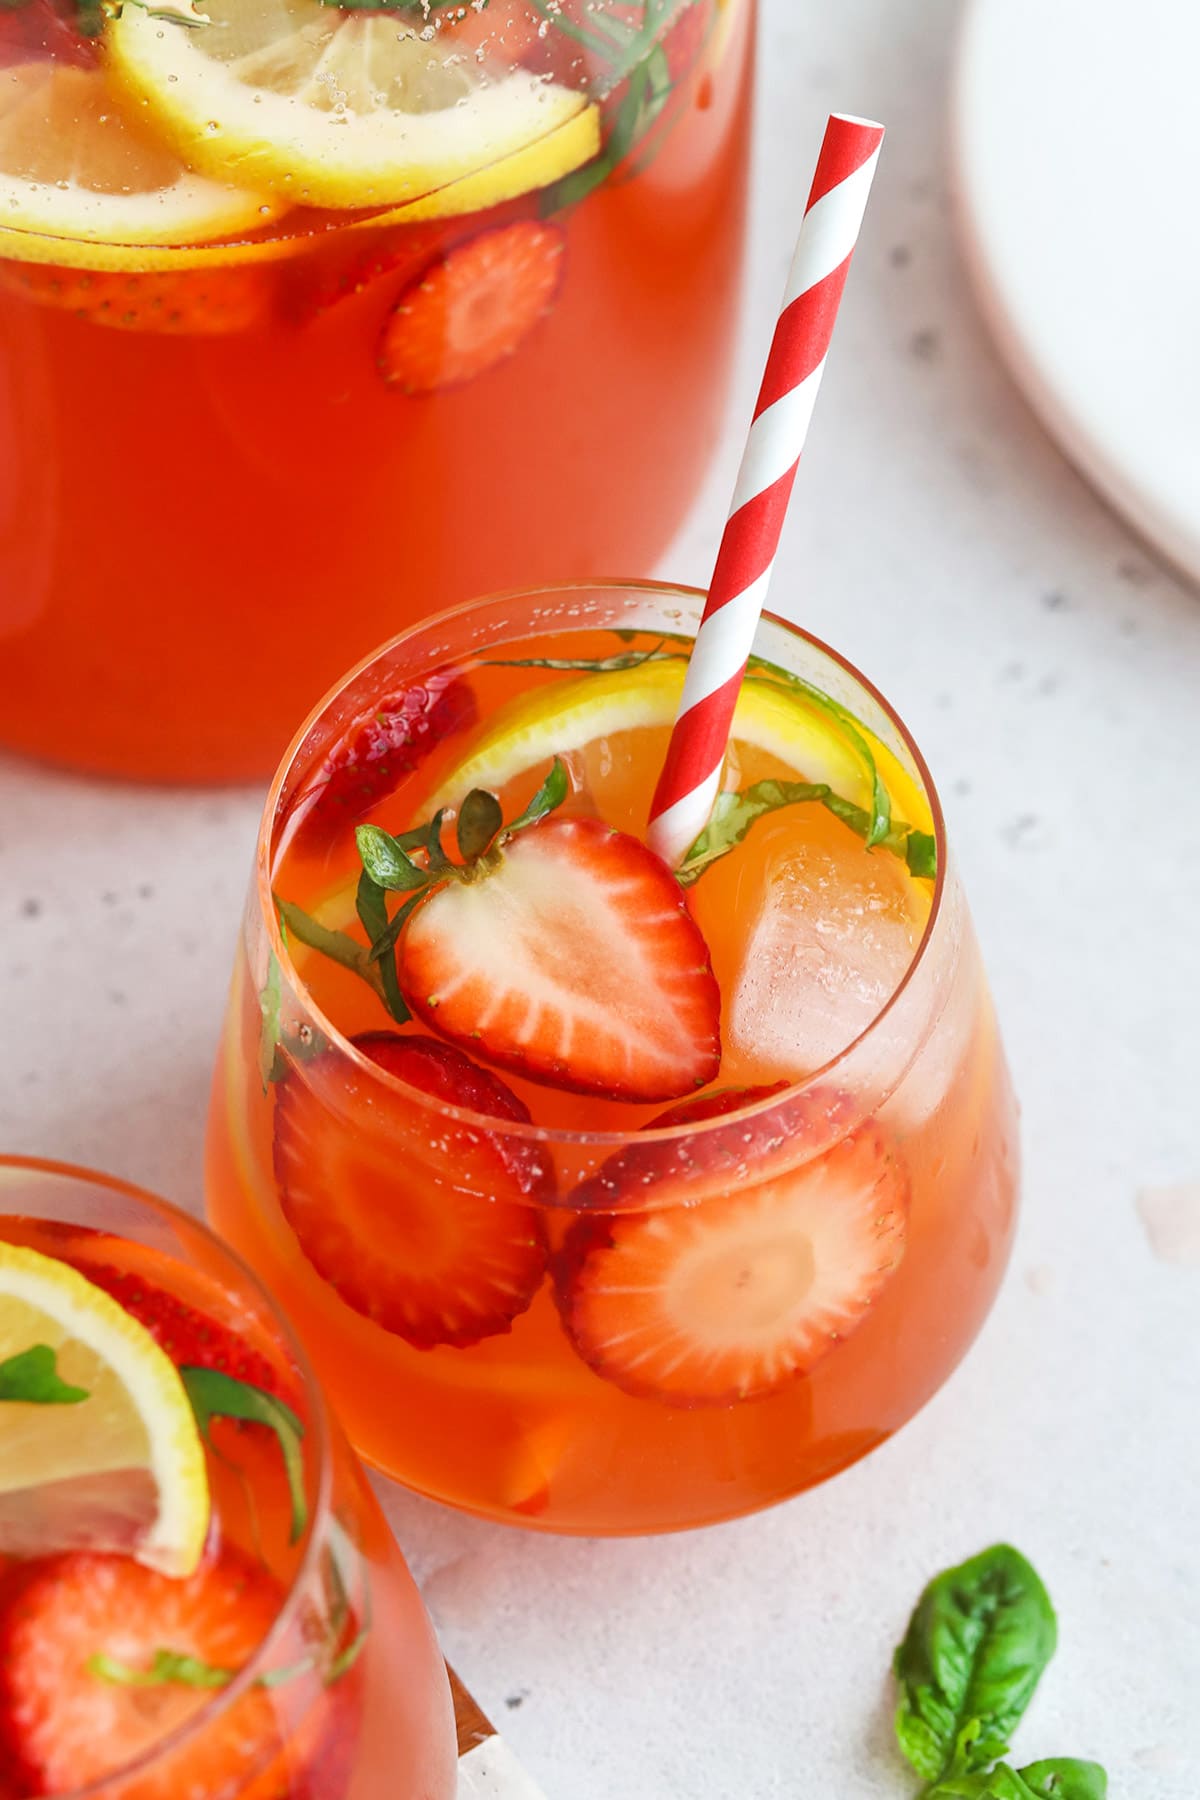 Overhead view of a glass of homemade strawberry basil lemonade